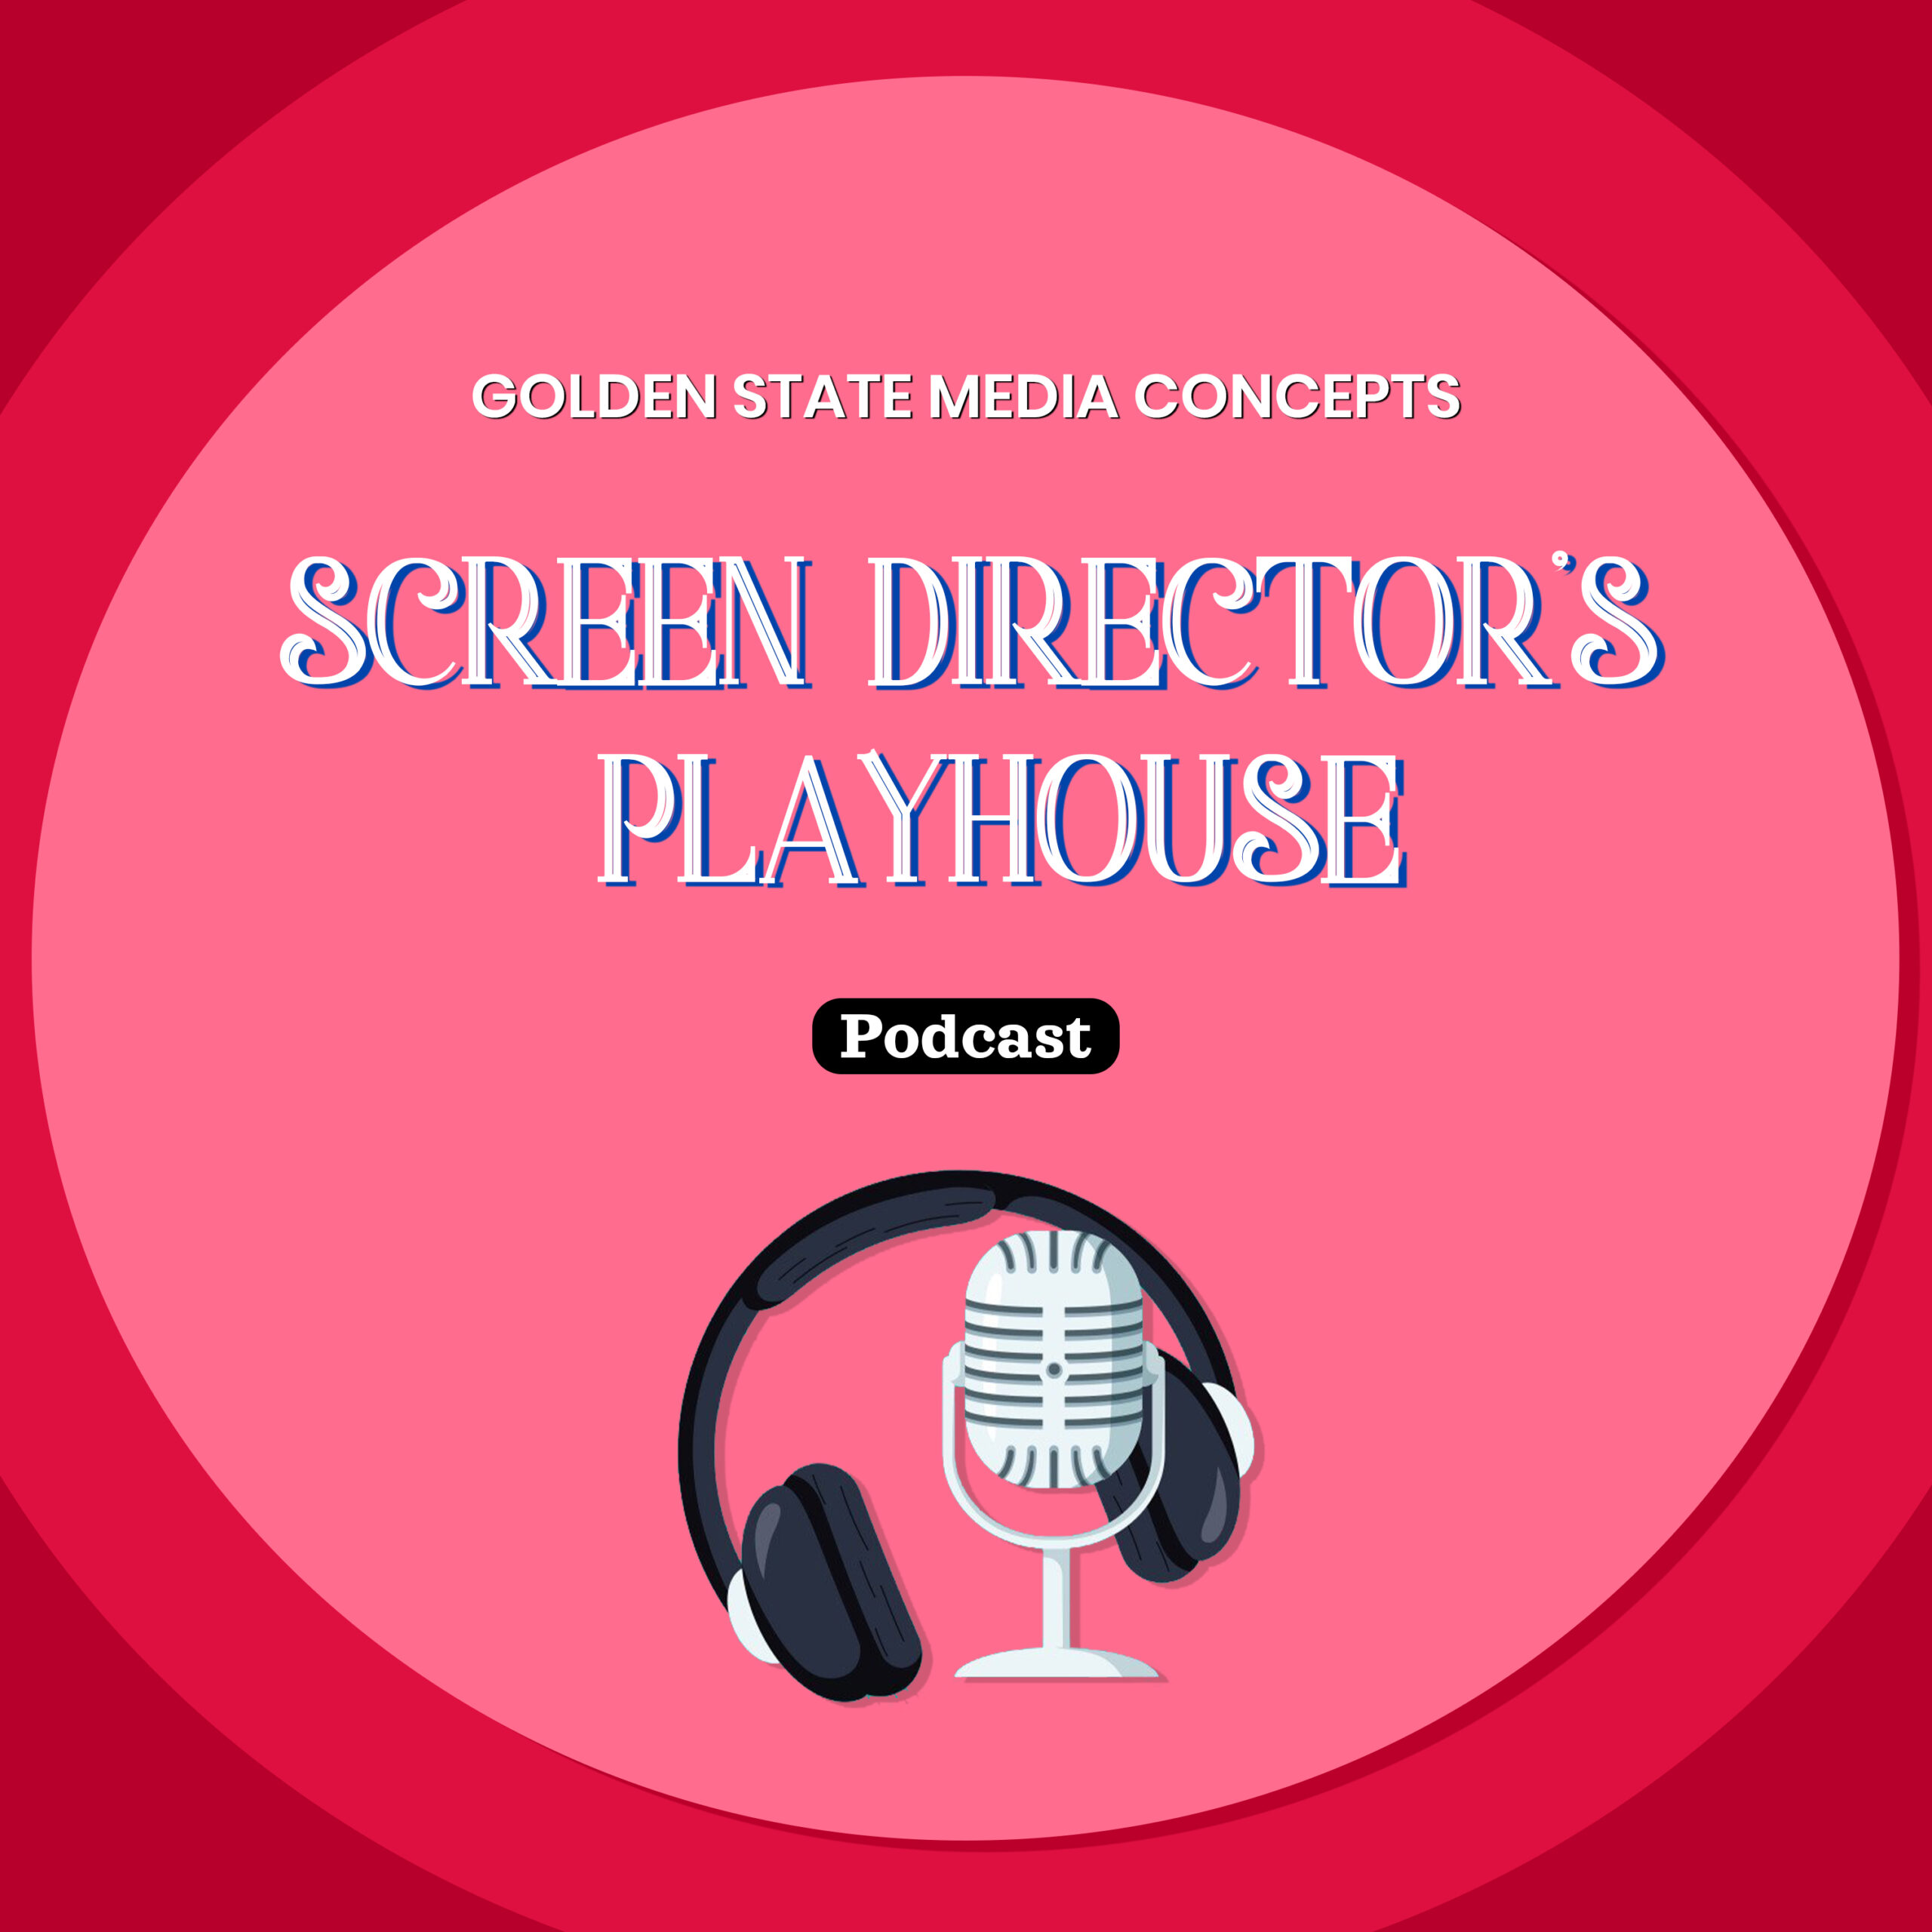 ScreenDirector's Playhouse